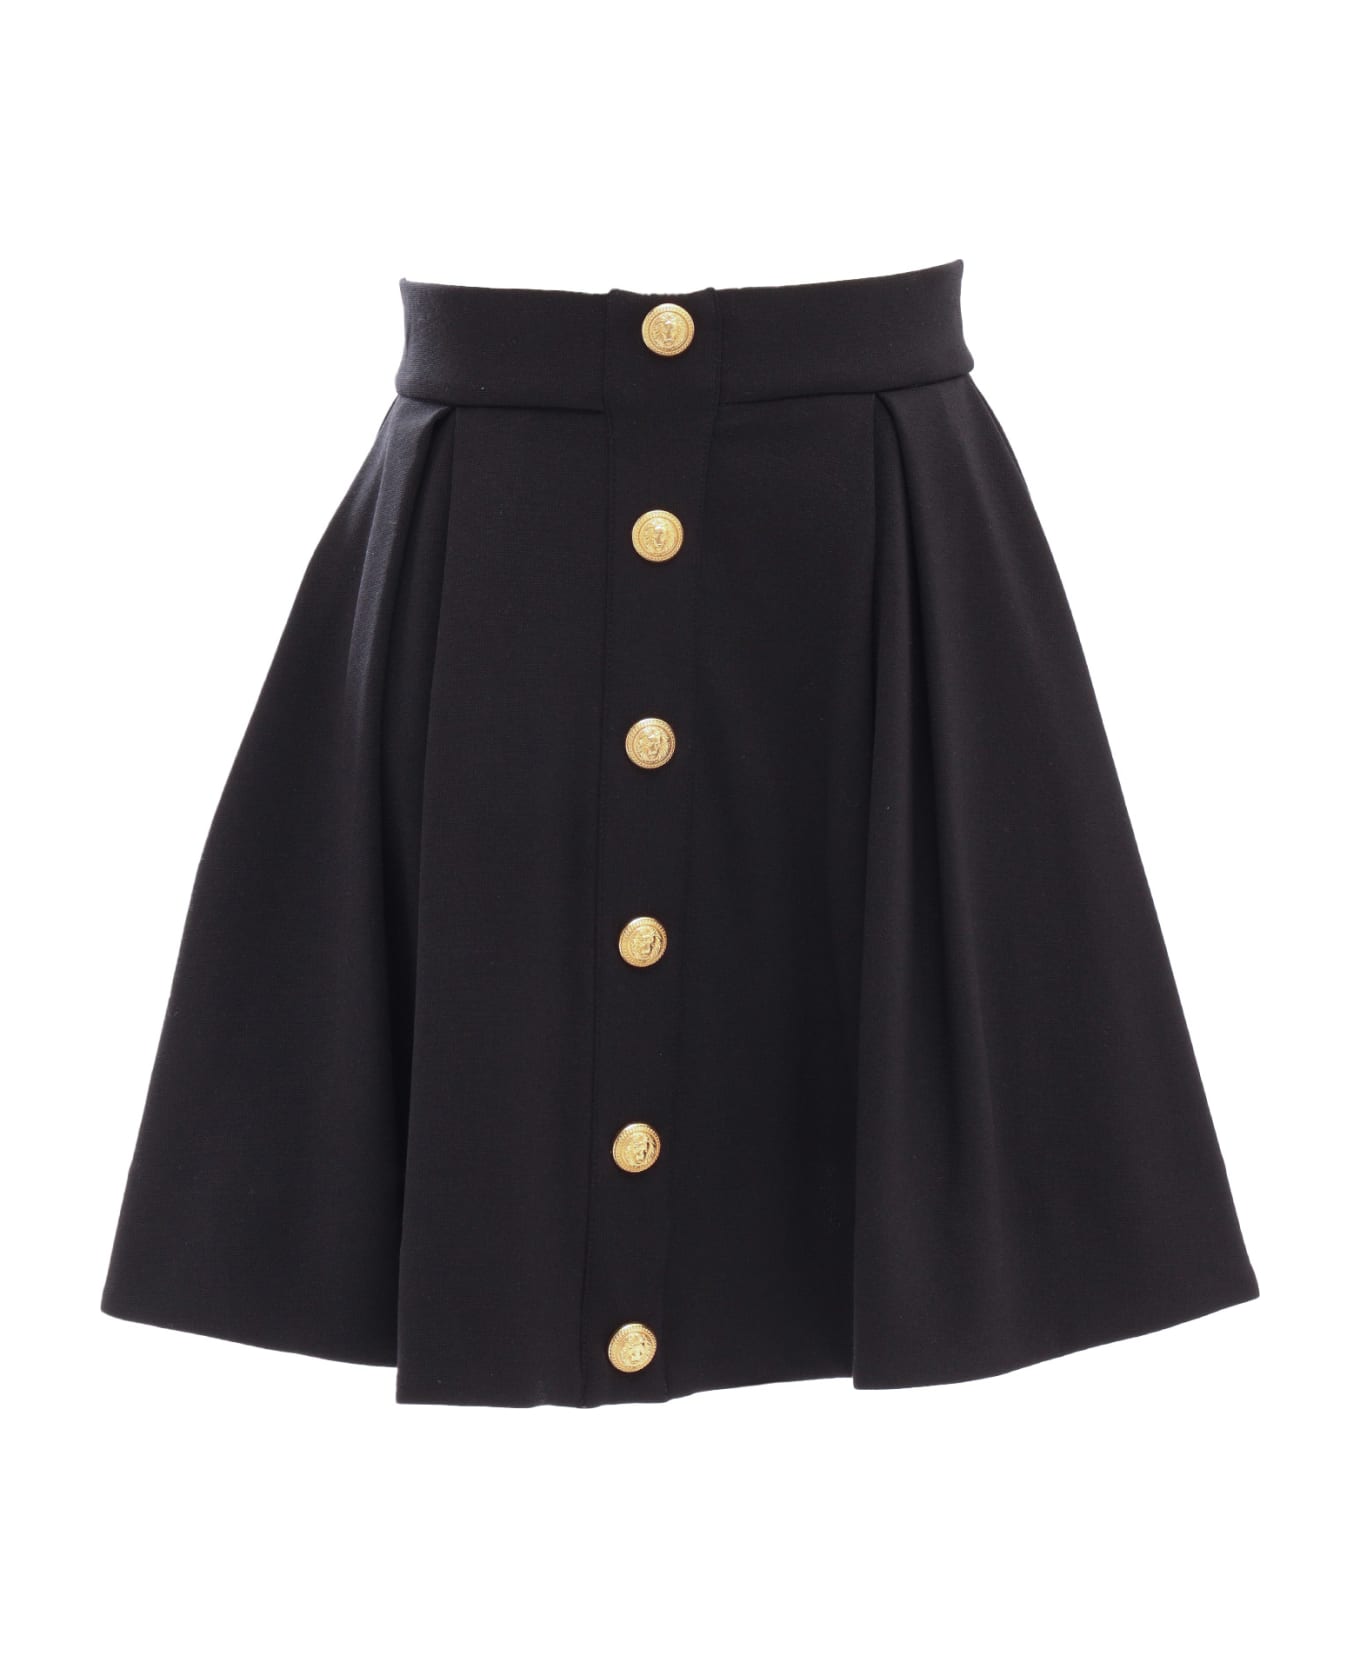 Balmain Logo Buttons Embellished Skirt - BLACK